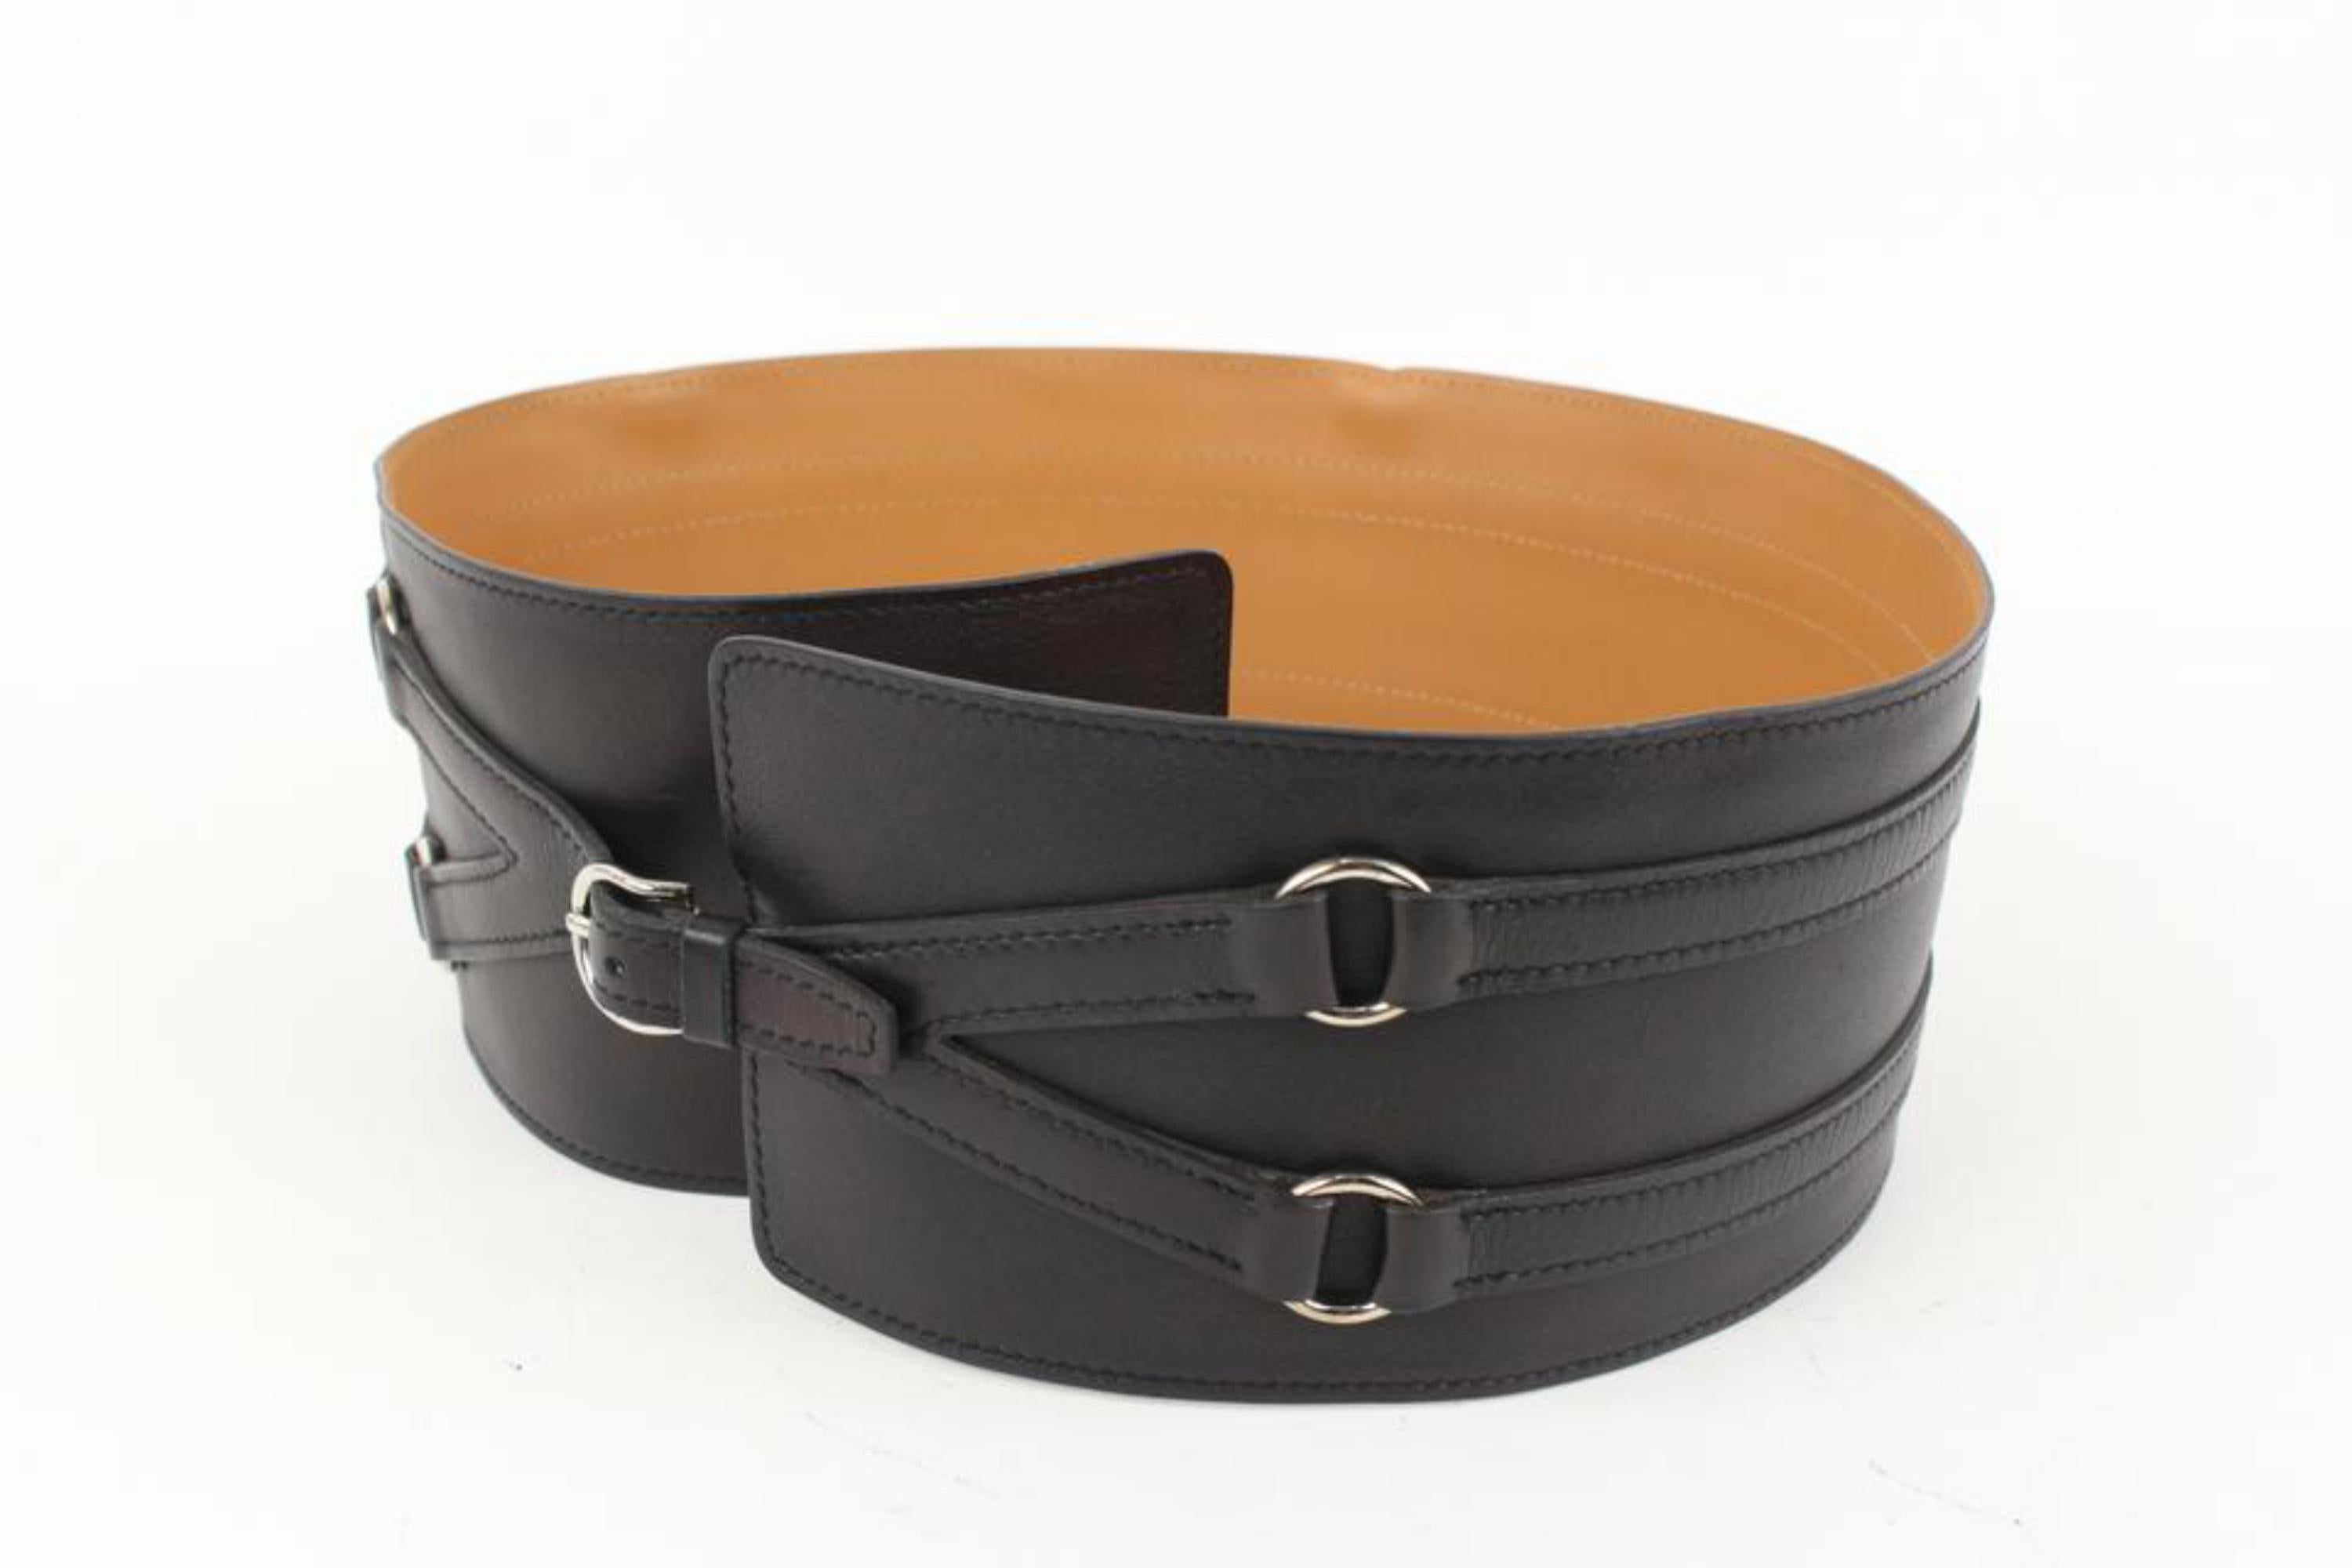 Hermès Black x Brown Corset Waist Belt 55h414s
Date Code/Serial Number: N in a Square
Made In: France
Measurements: Length:  34